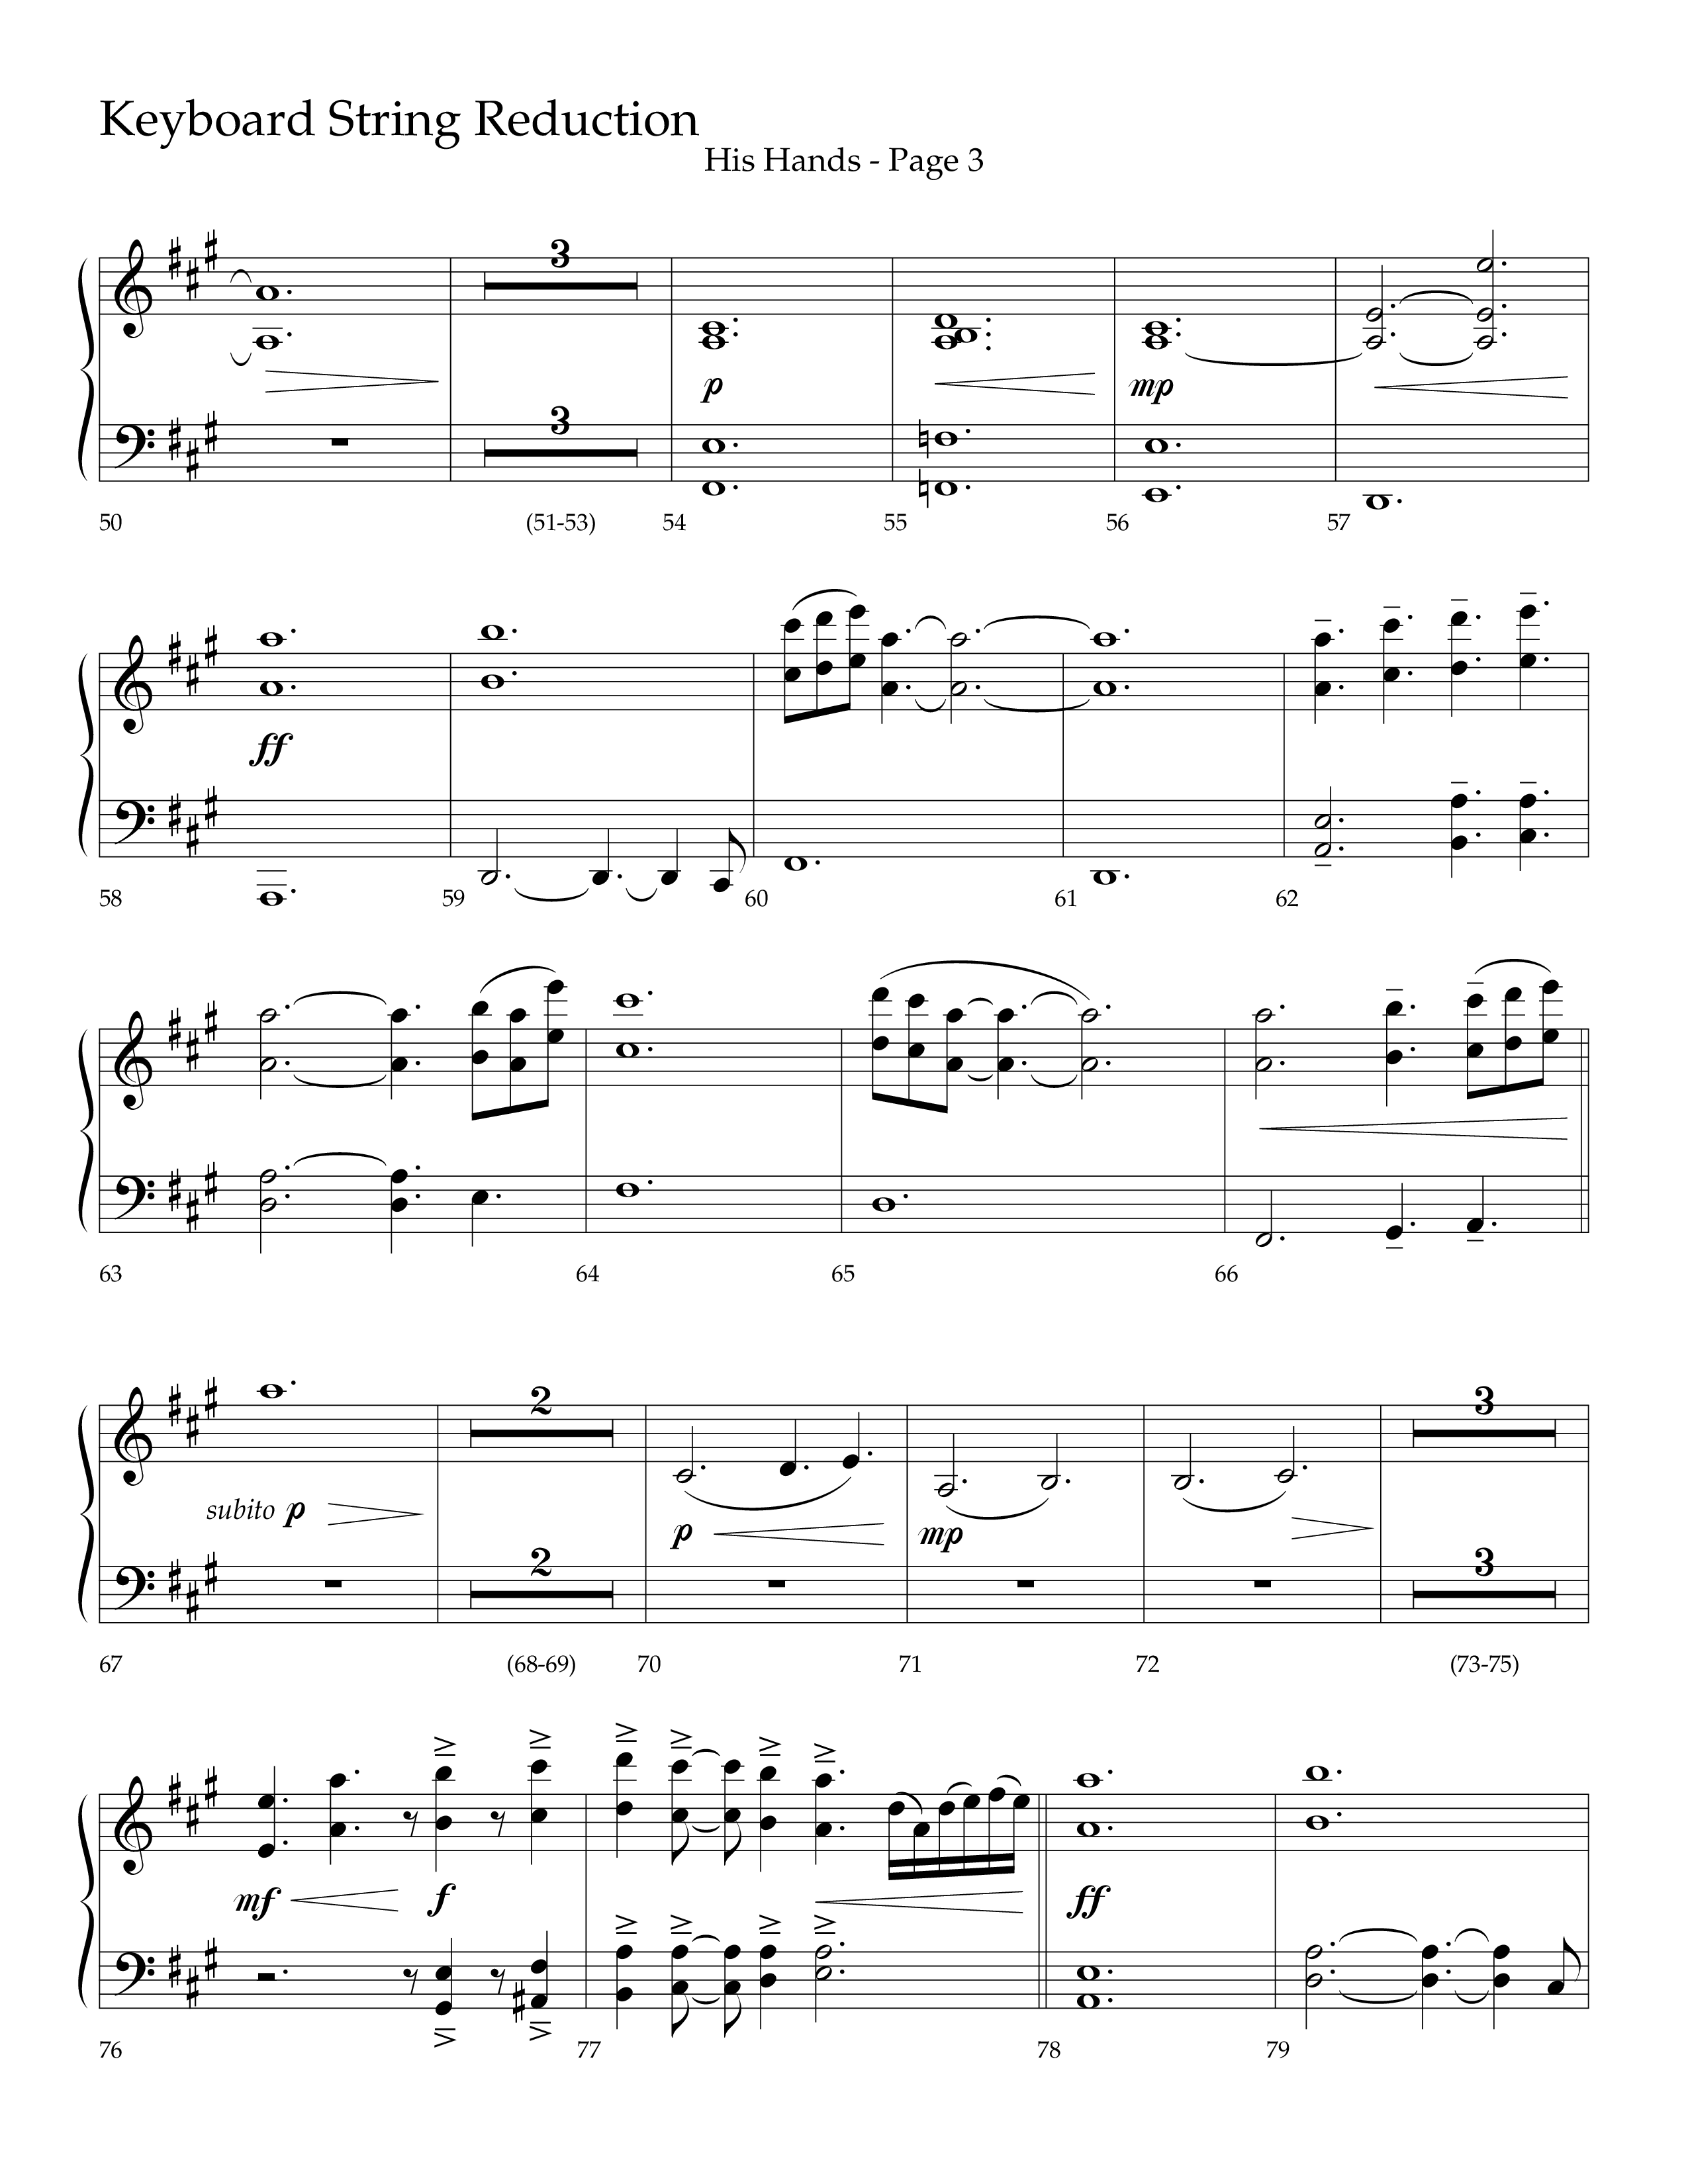 His Hands (Choral Anthem SATB) String Reduction (Lifeway Choral / Arr. Cliff Duren)